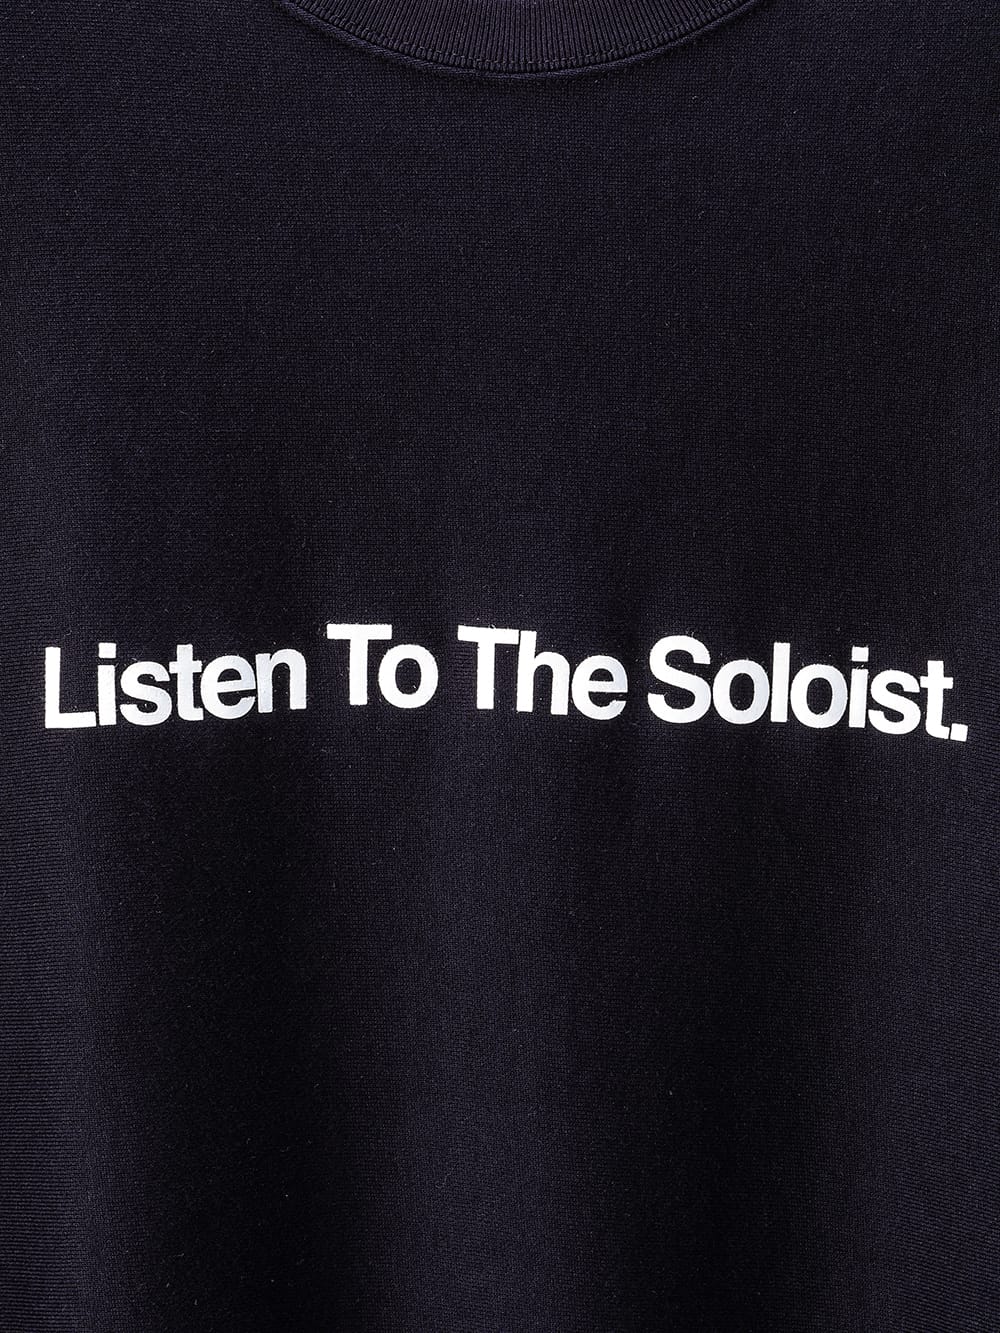 Listen To The Soloist.(オーバーサイズドバイカラークルーネックスウェットシャツ)